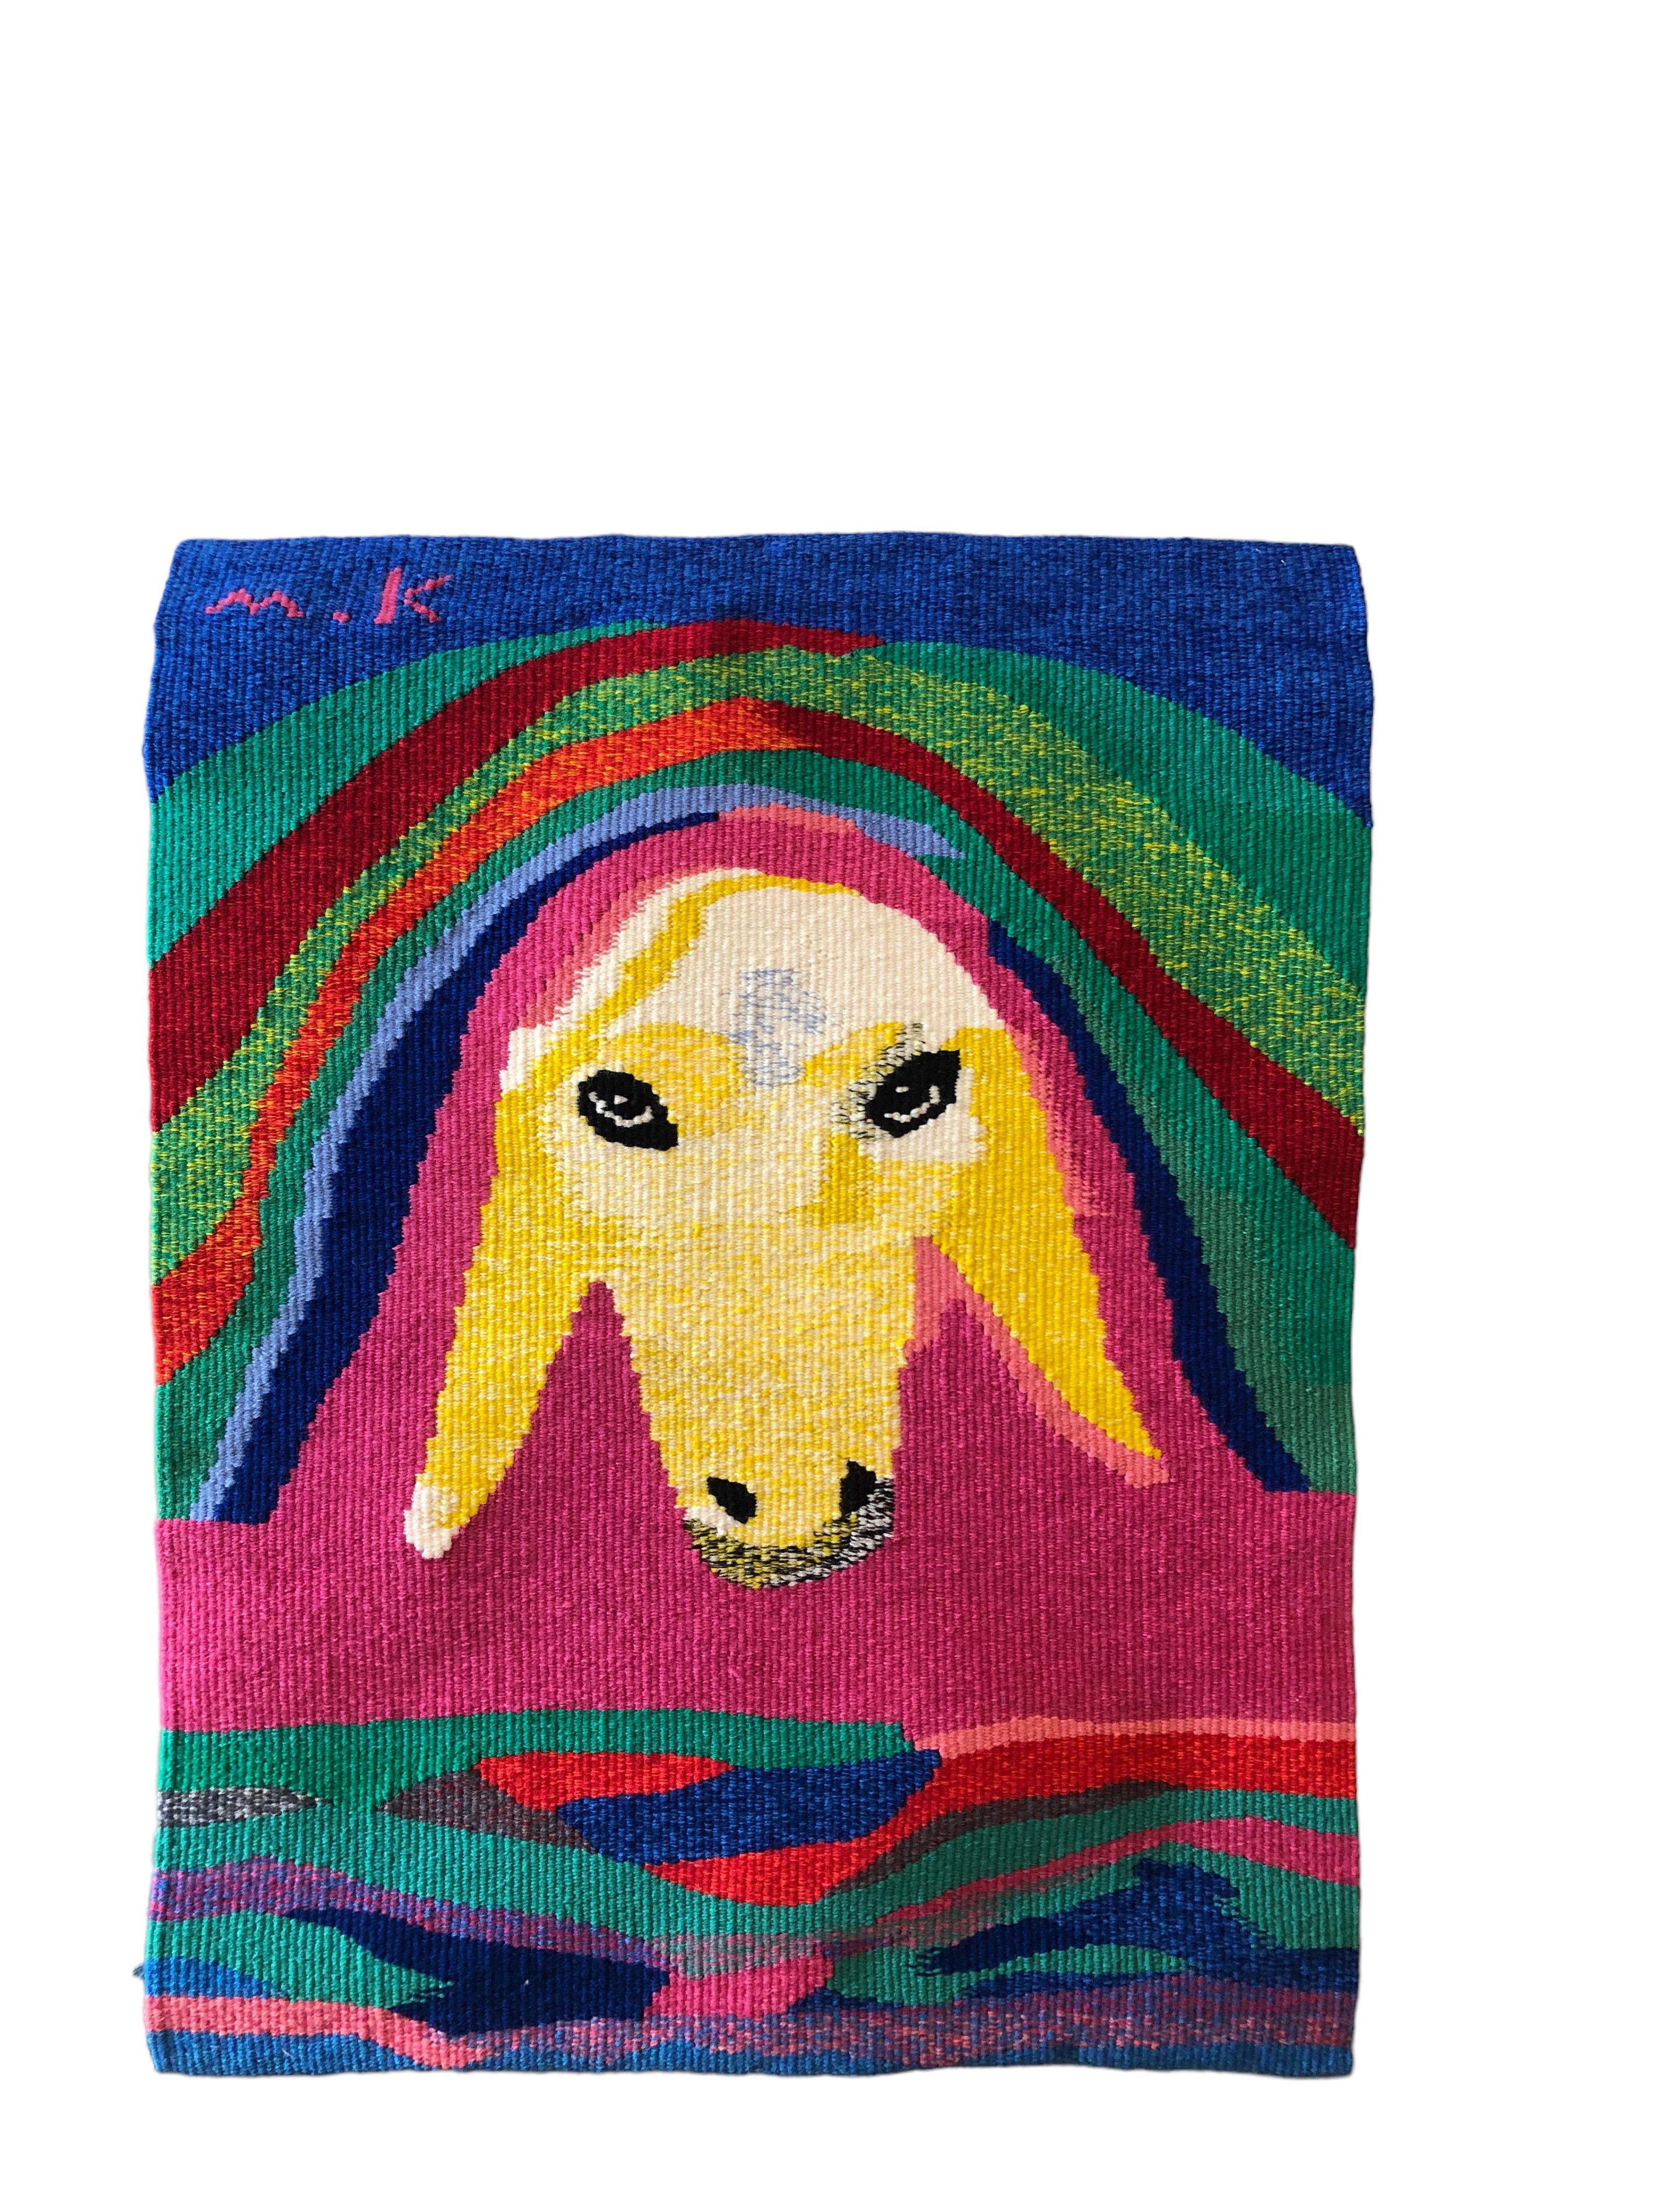  Israeli Hand Woven Colorful Wool Tapestry Weaving Menashe Kadishman Sheep Head  For Sale 8